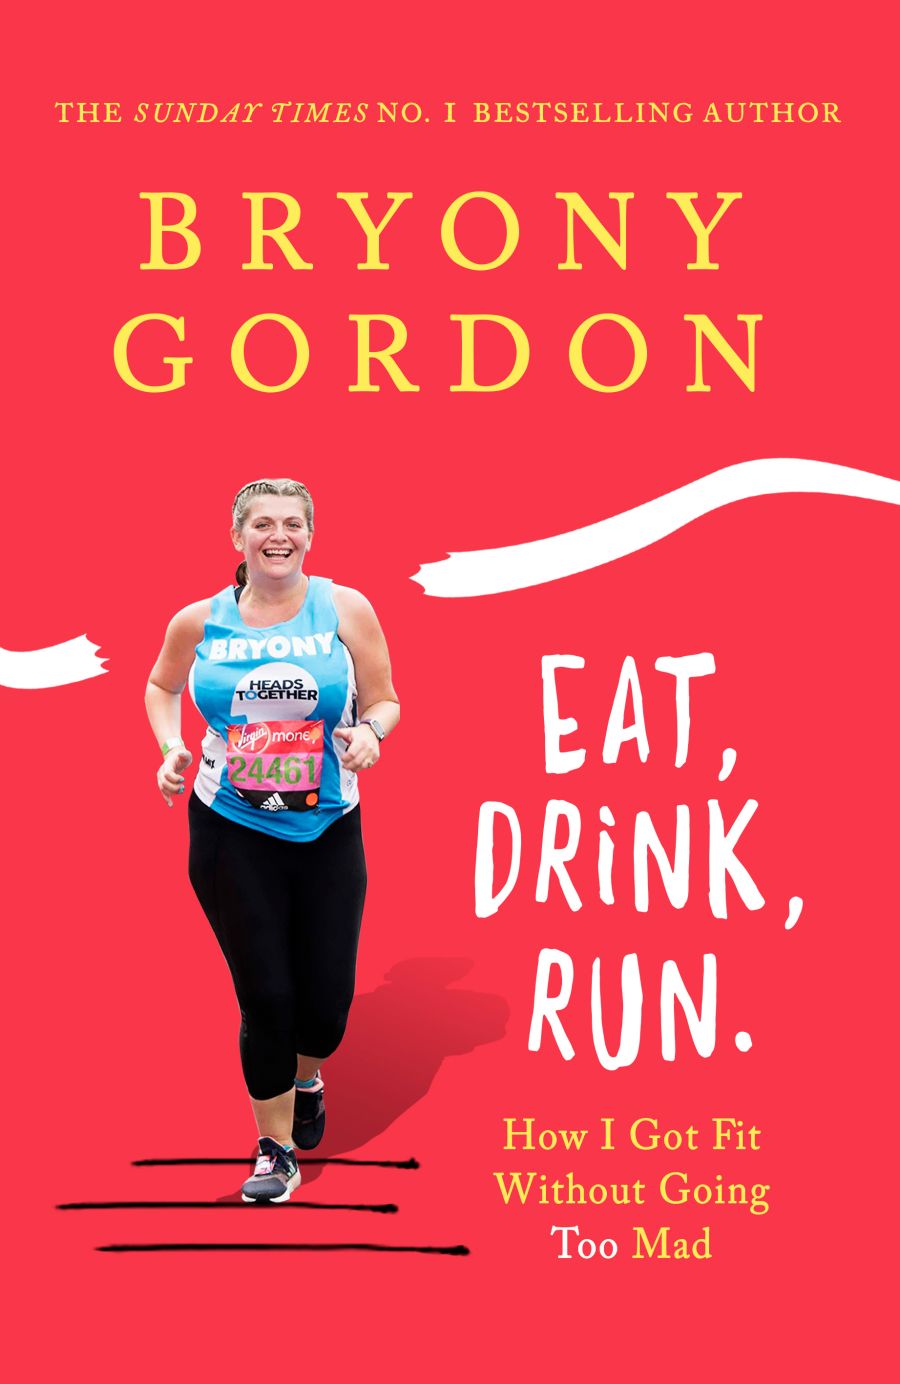 Book cover of Bryony Gordon, Eat, Drink, Run..